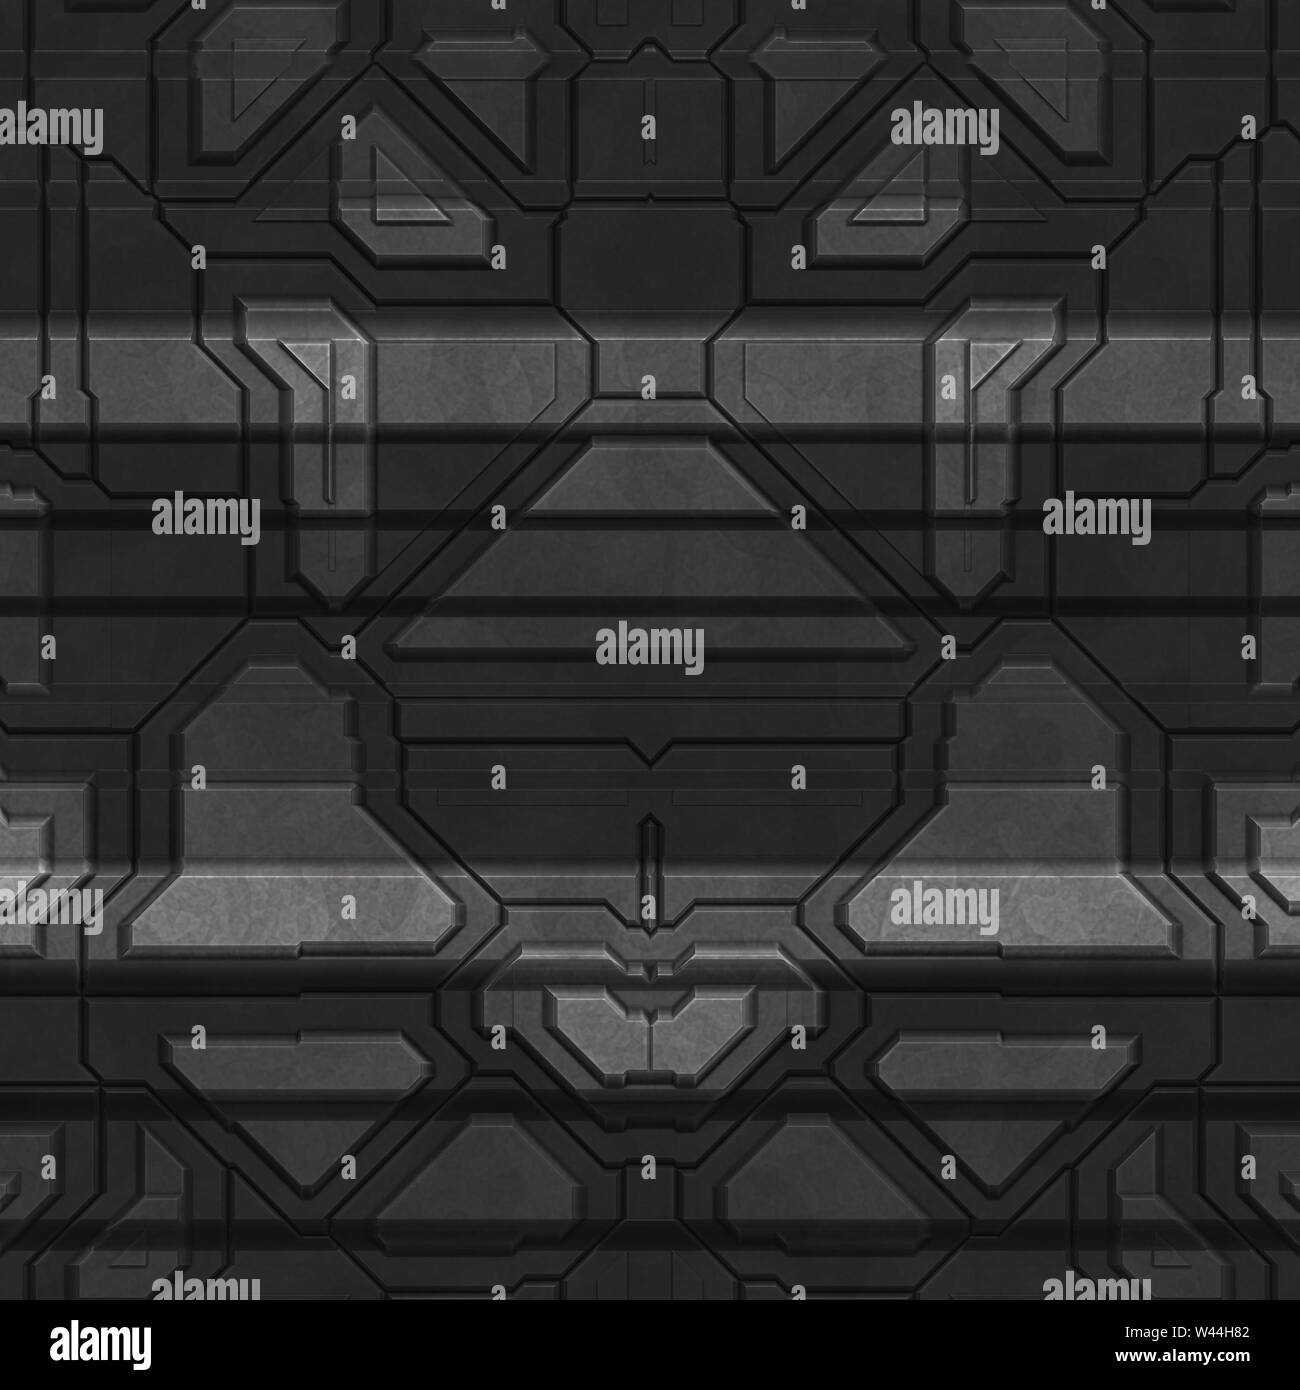 Spaceship hull texture or pattern. Seamless SciFi Panels. Futuristic illustration Stock Photo